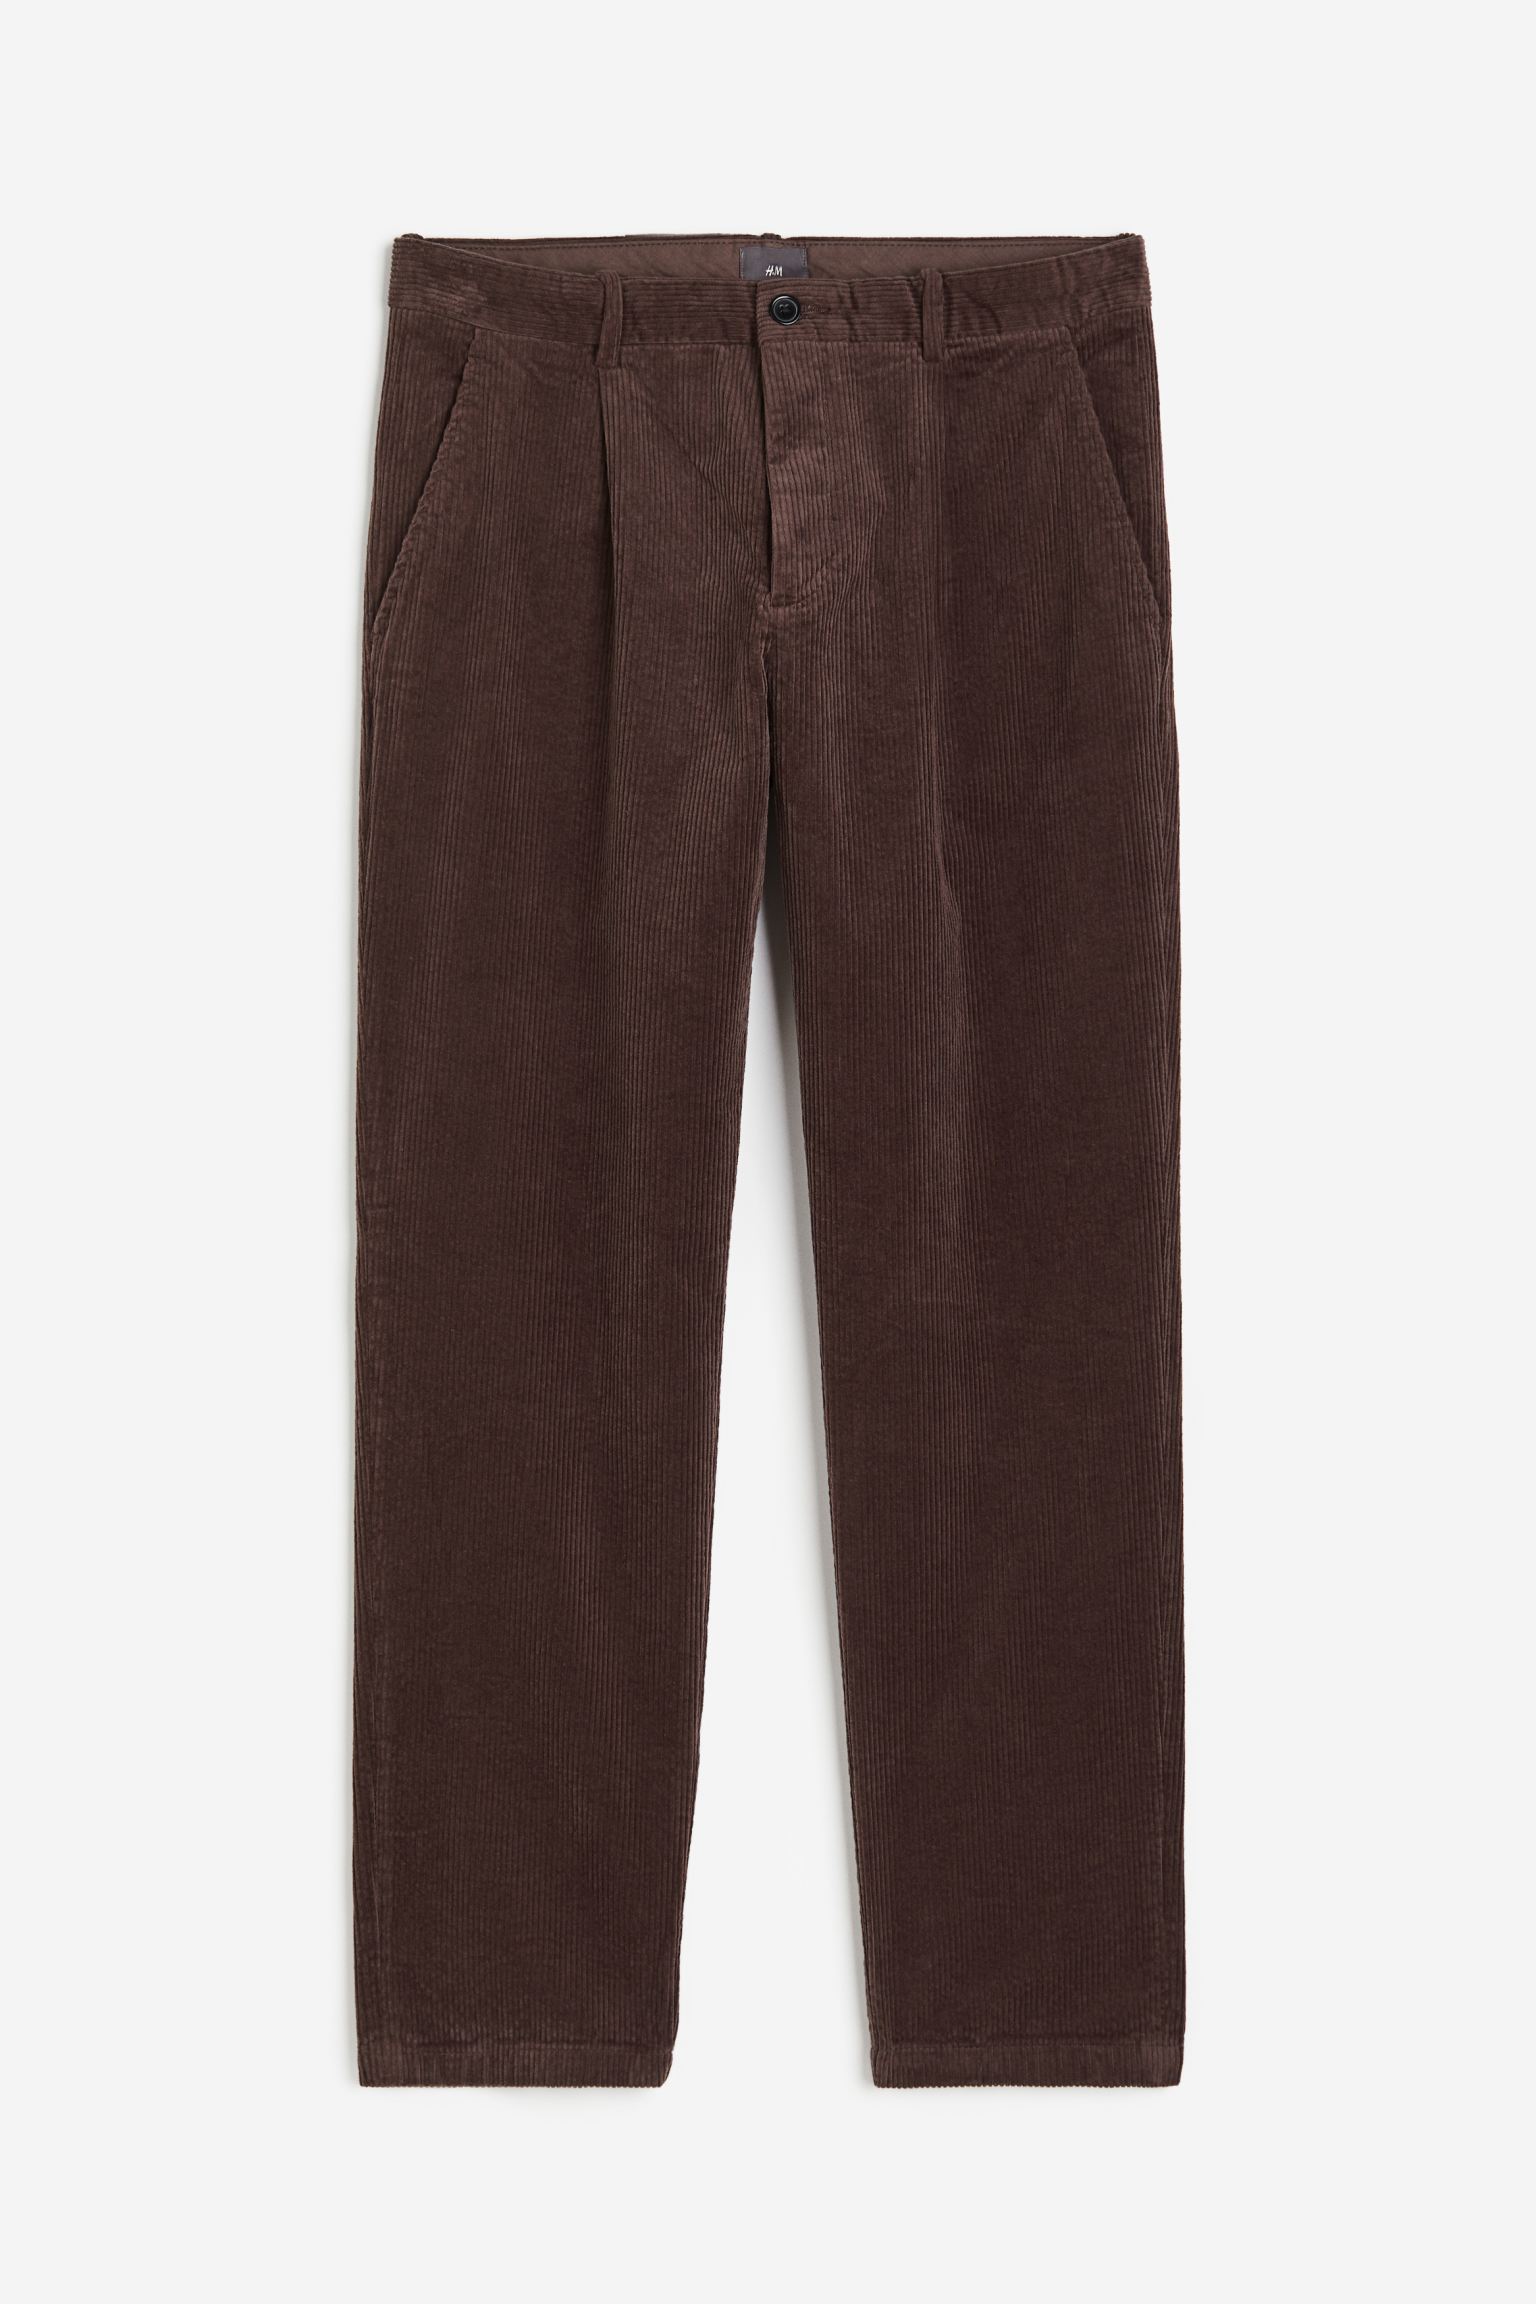 Брюки H&M Regular Fit Corduroy, коричневый брюки uniqlo corduroy relaxed fit коричневый